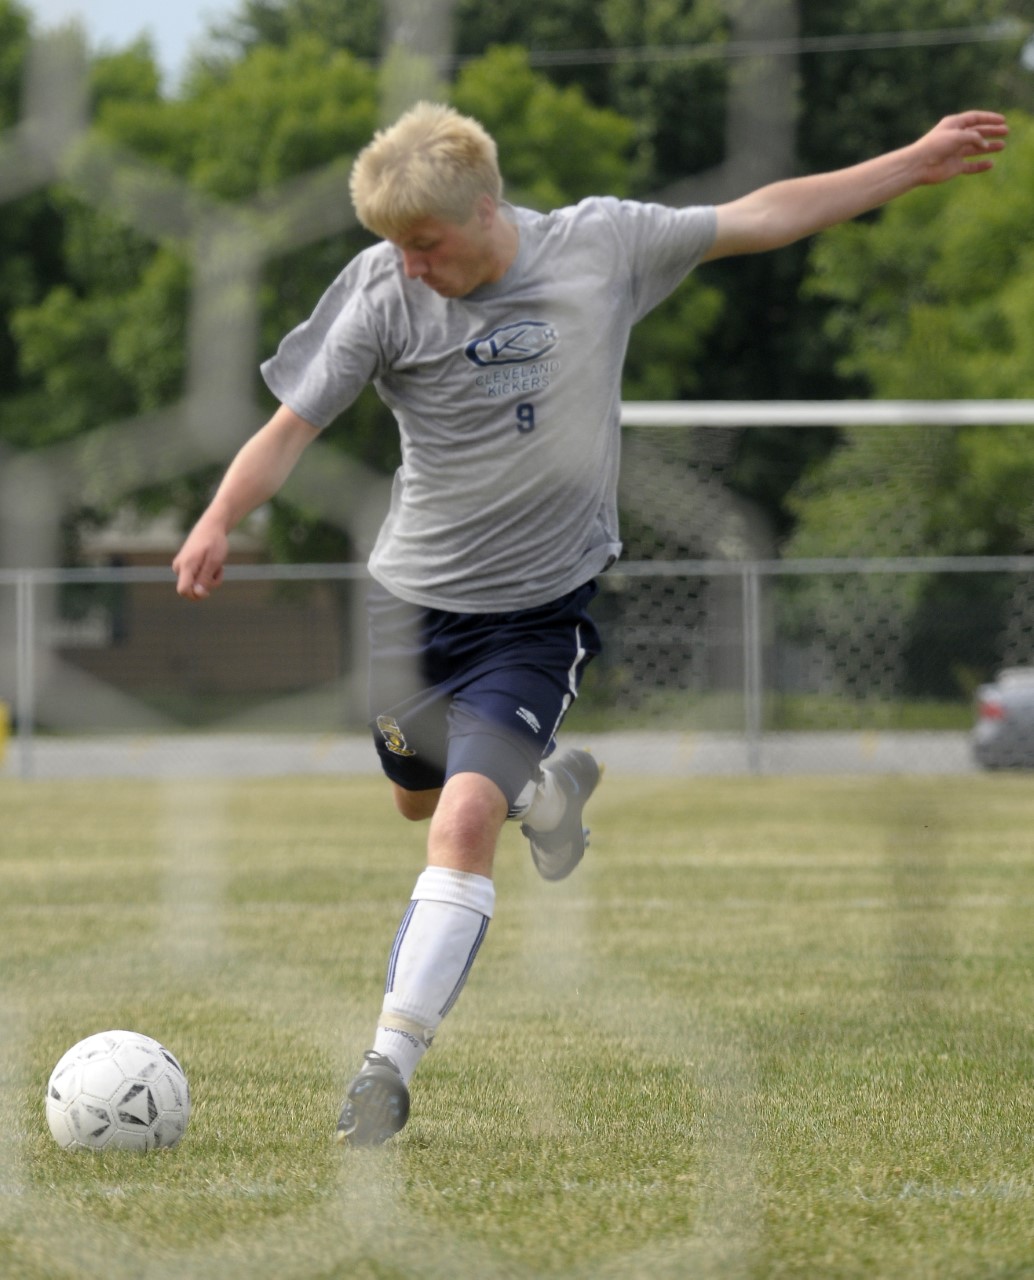 A high-school age boy strikes a shot towards goal